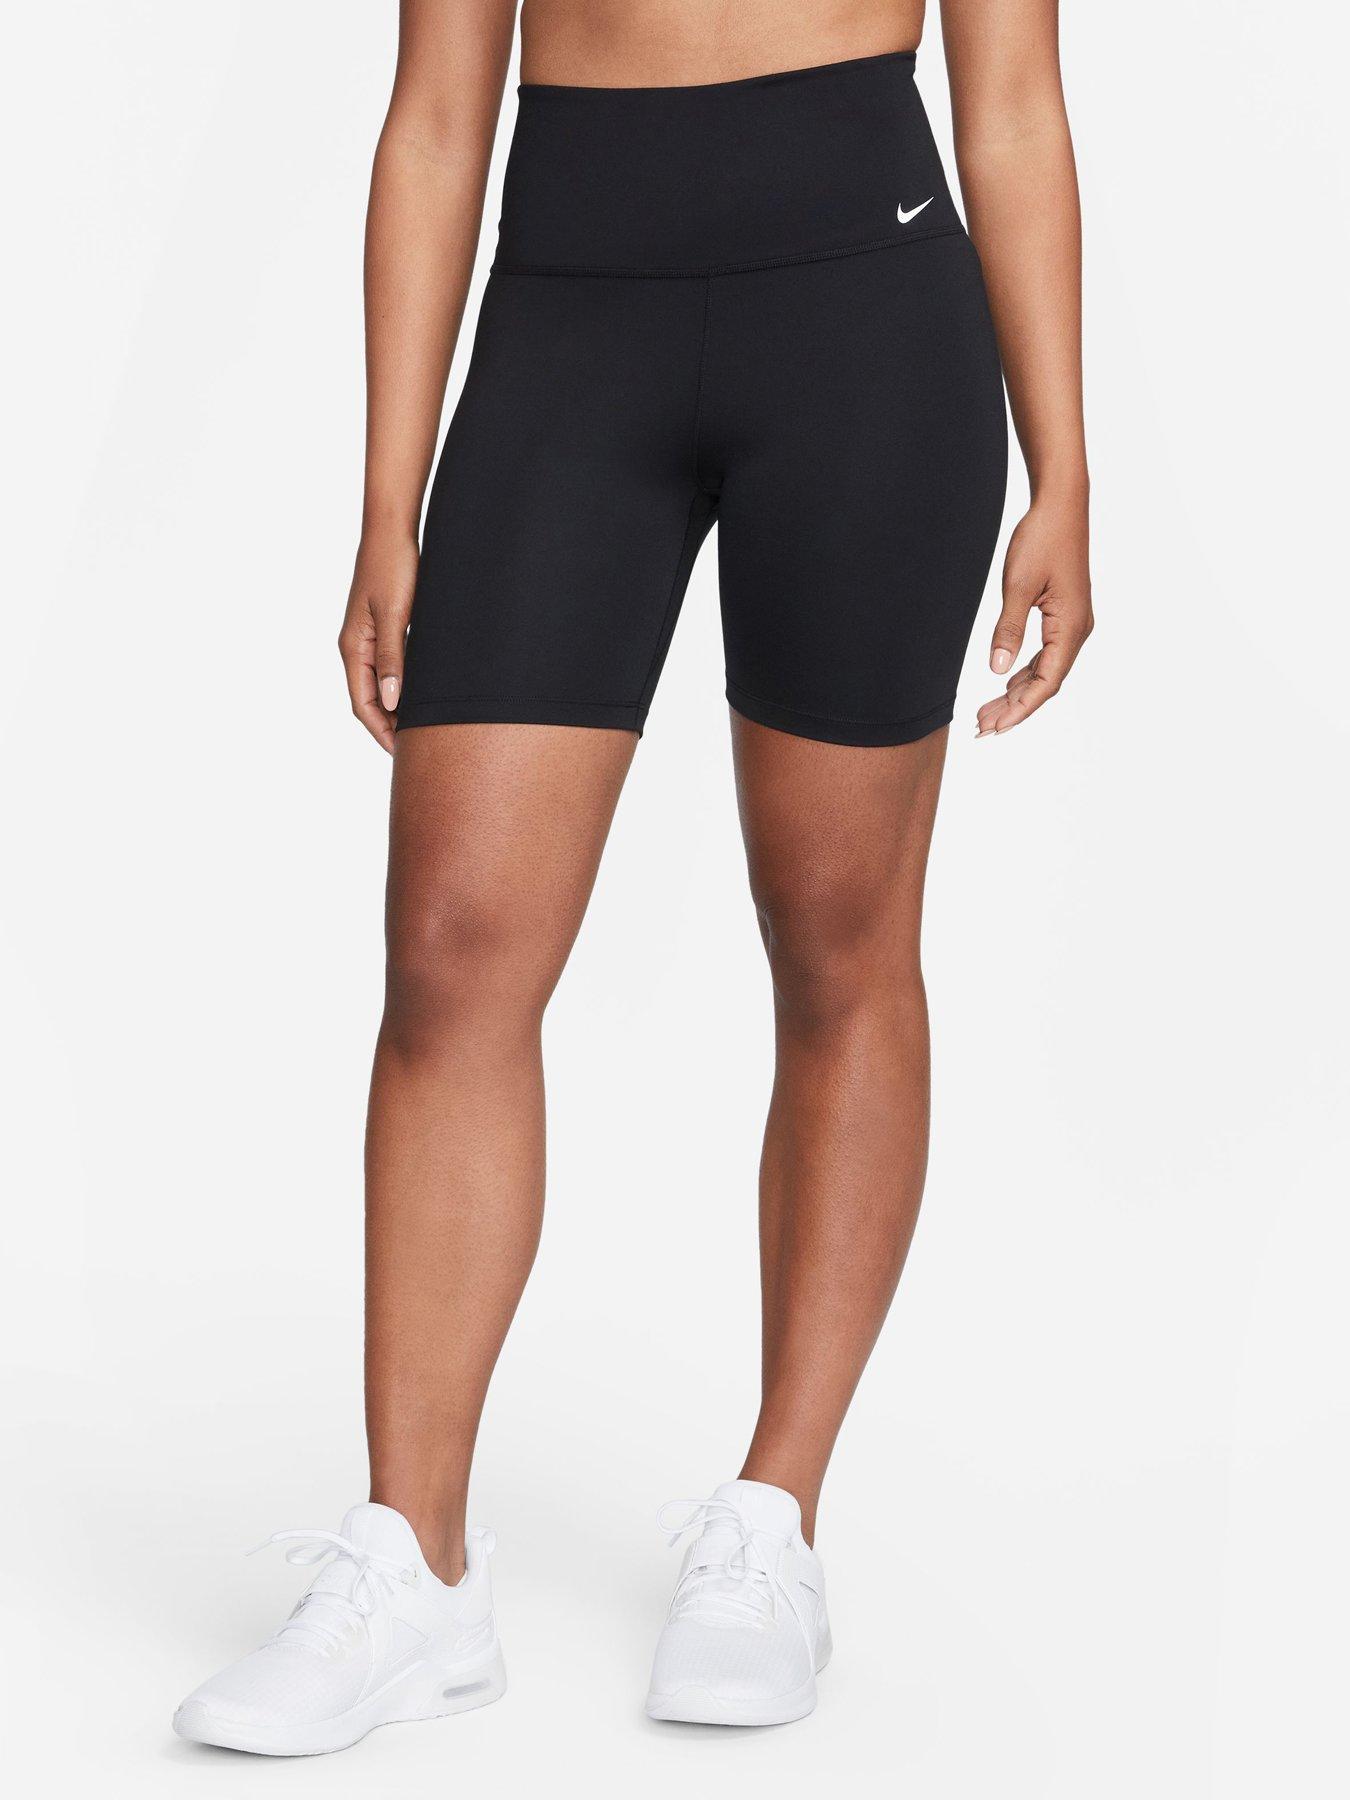 Nike Pro Training 365 3-inch shorts in dark navy